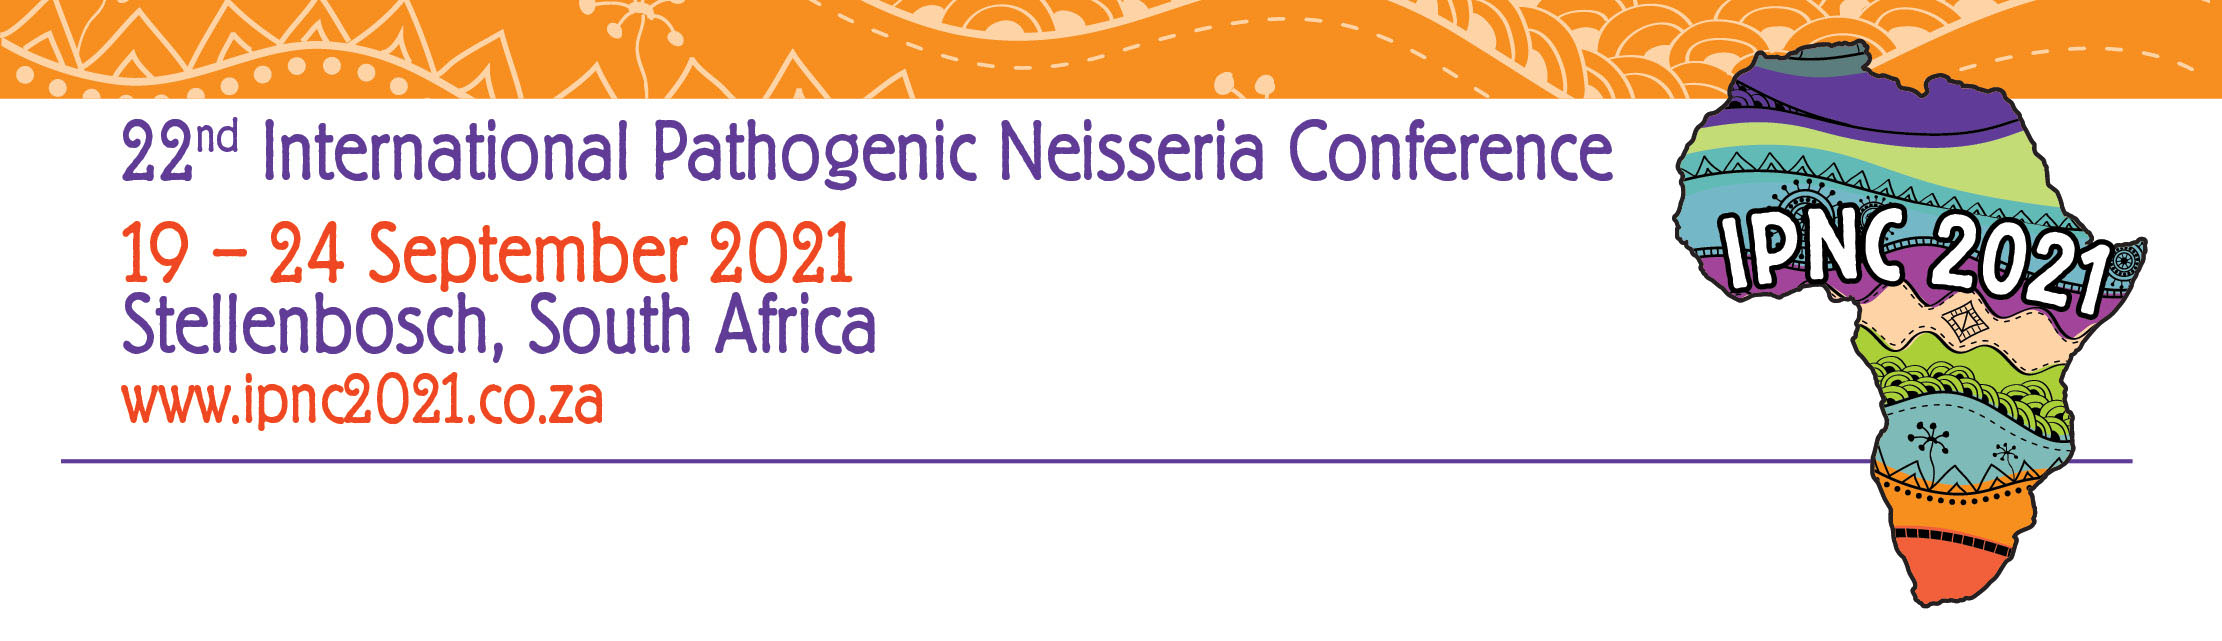 The 22nd International Pathogenic Neisseria Conference IPNC 2021